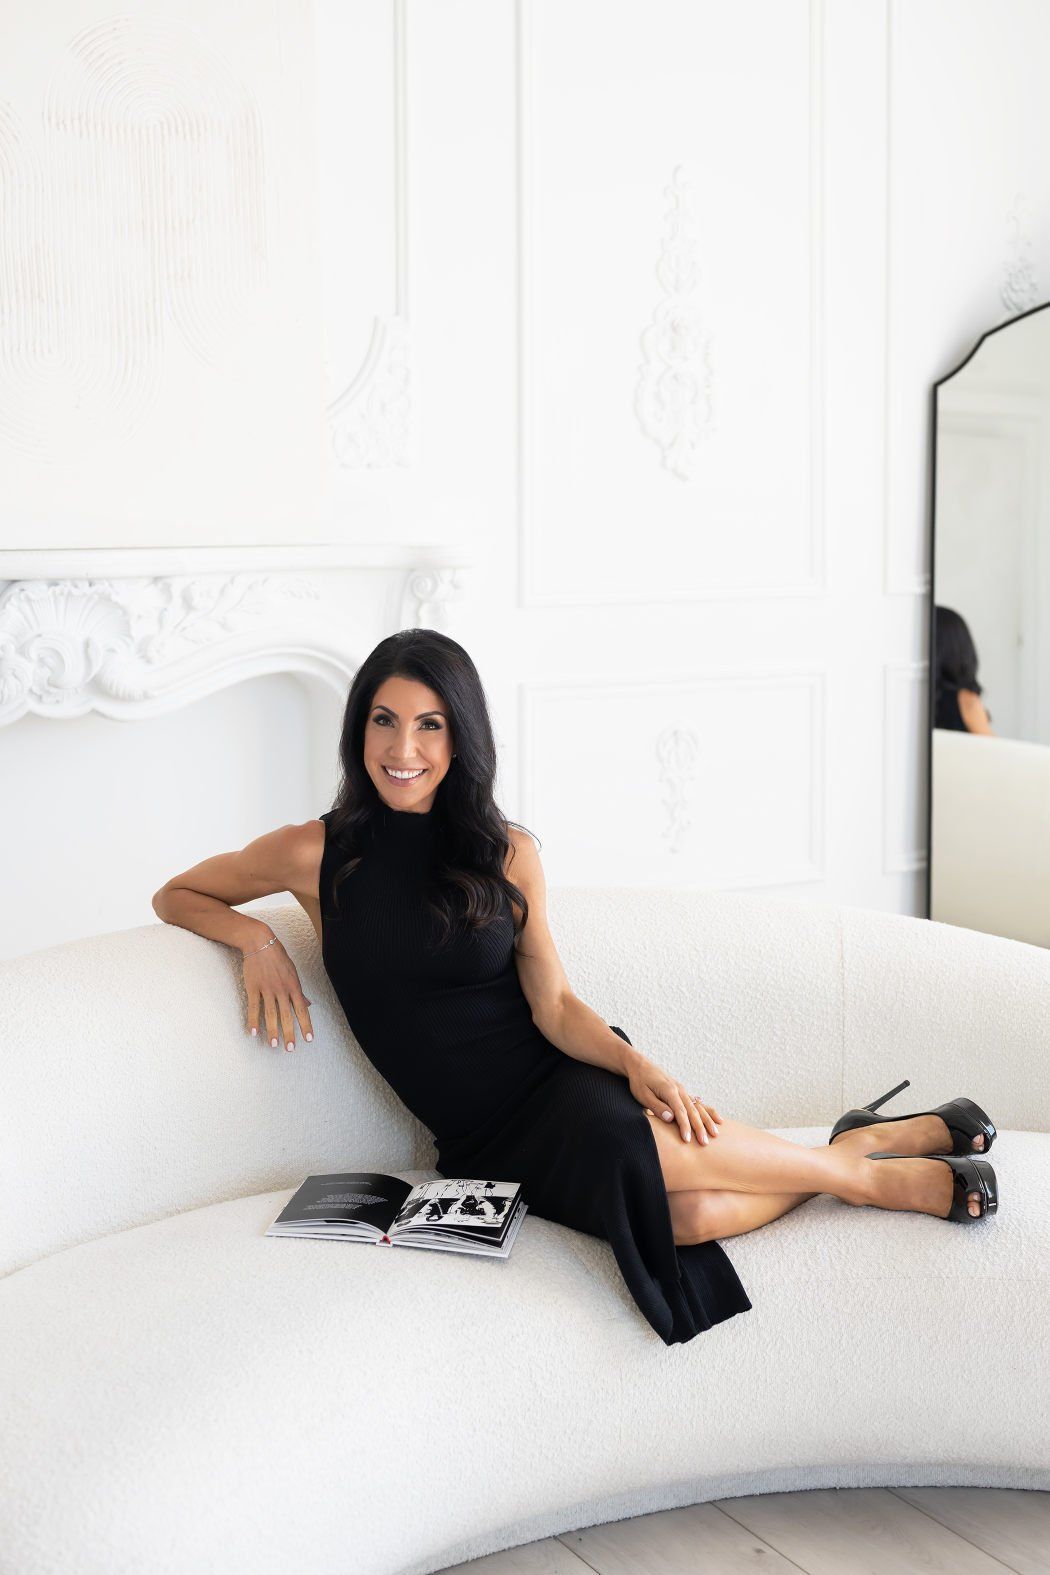 a woman wearing a black dress sitting on a white sofa